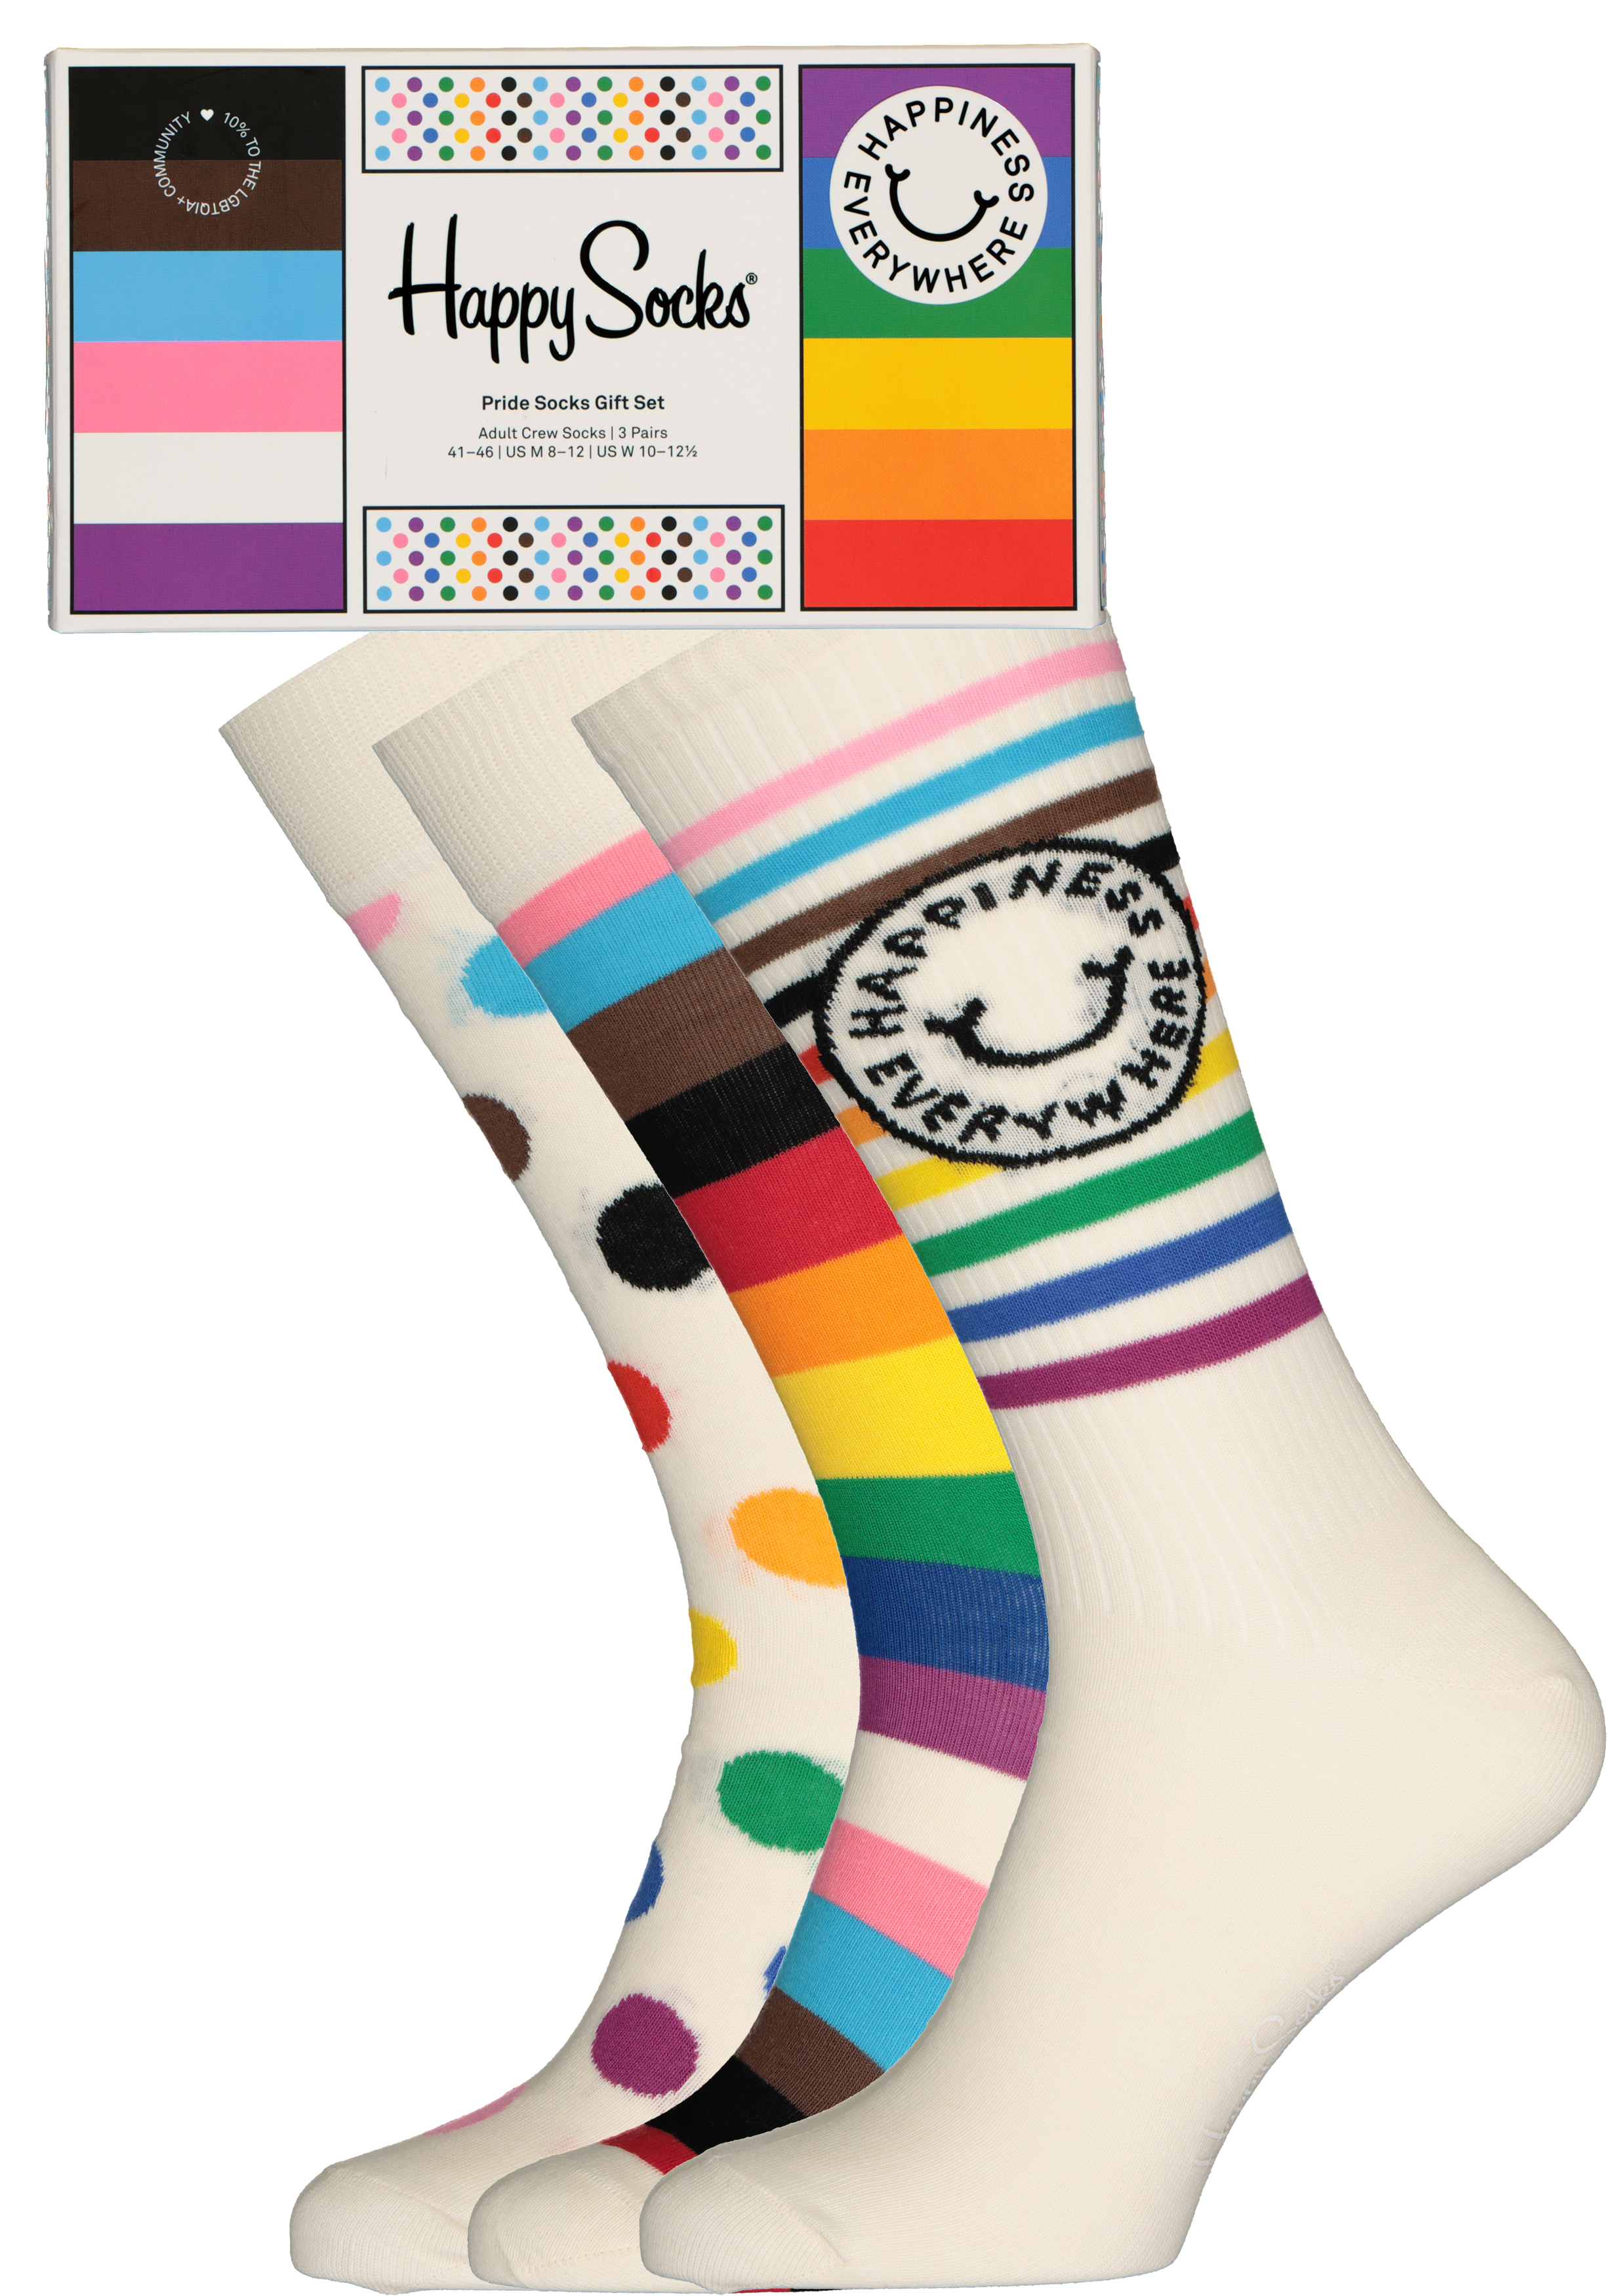 met - Socks tot Happy in... sokken Pride SALE 70% unisex (3-pack), Gift kortingen Socks Set